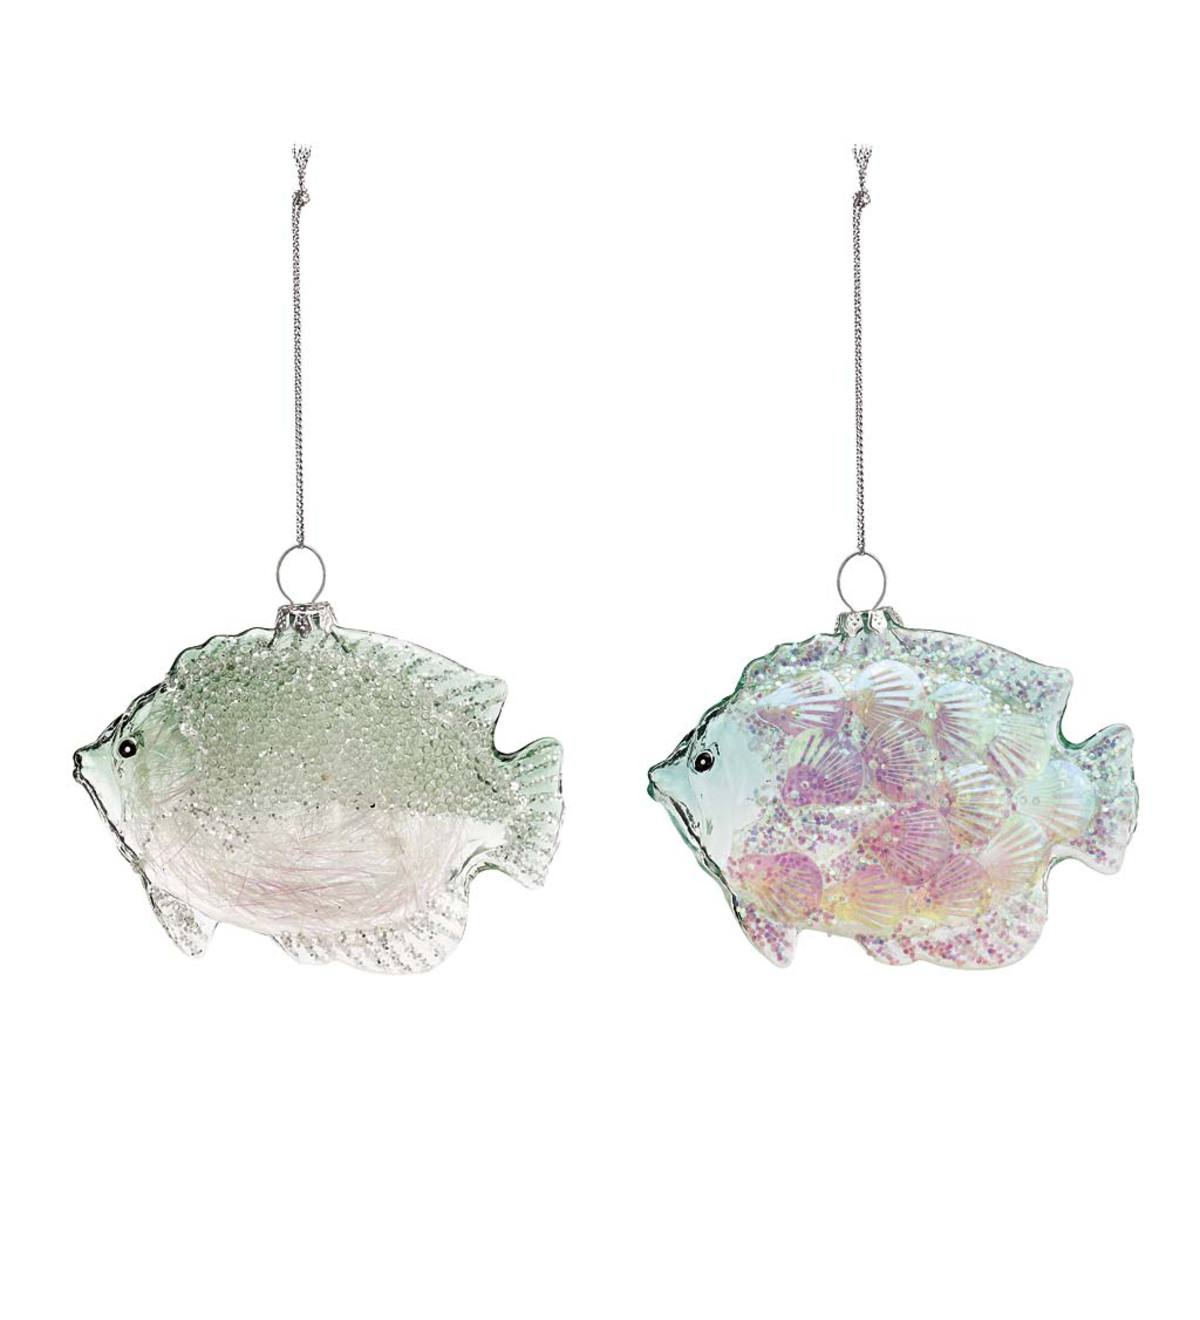 Glass Fish Ornaments, Set of 2